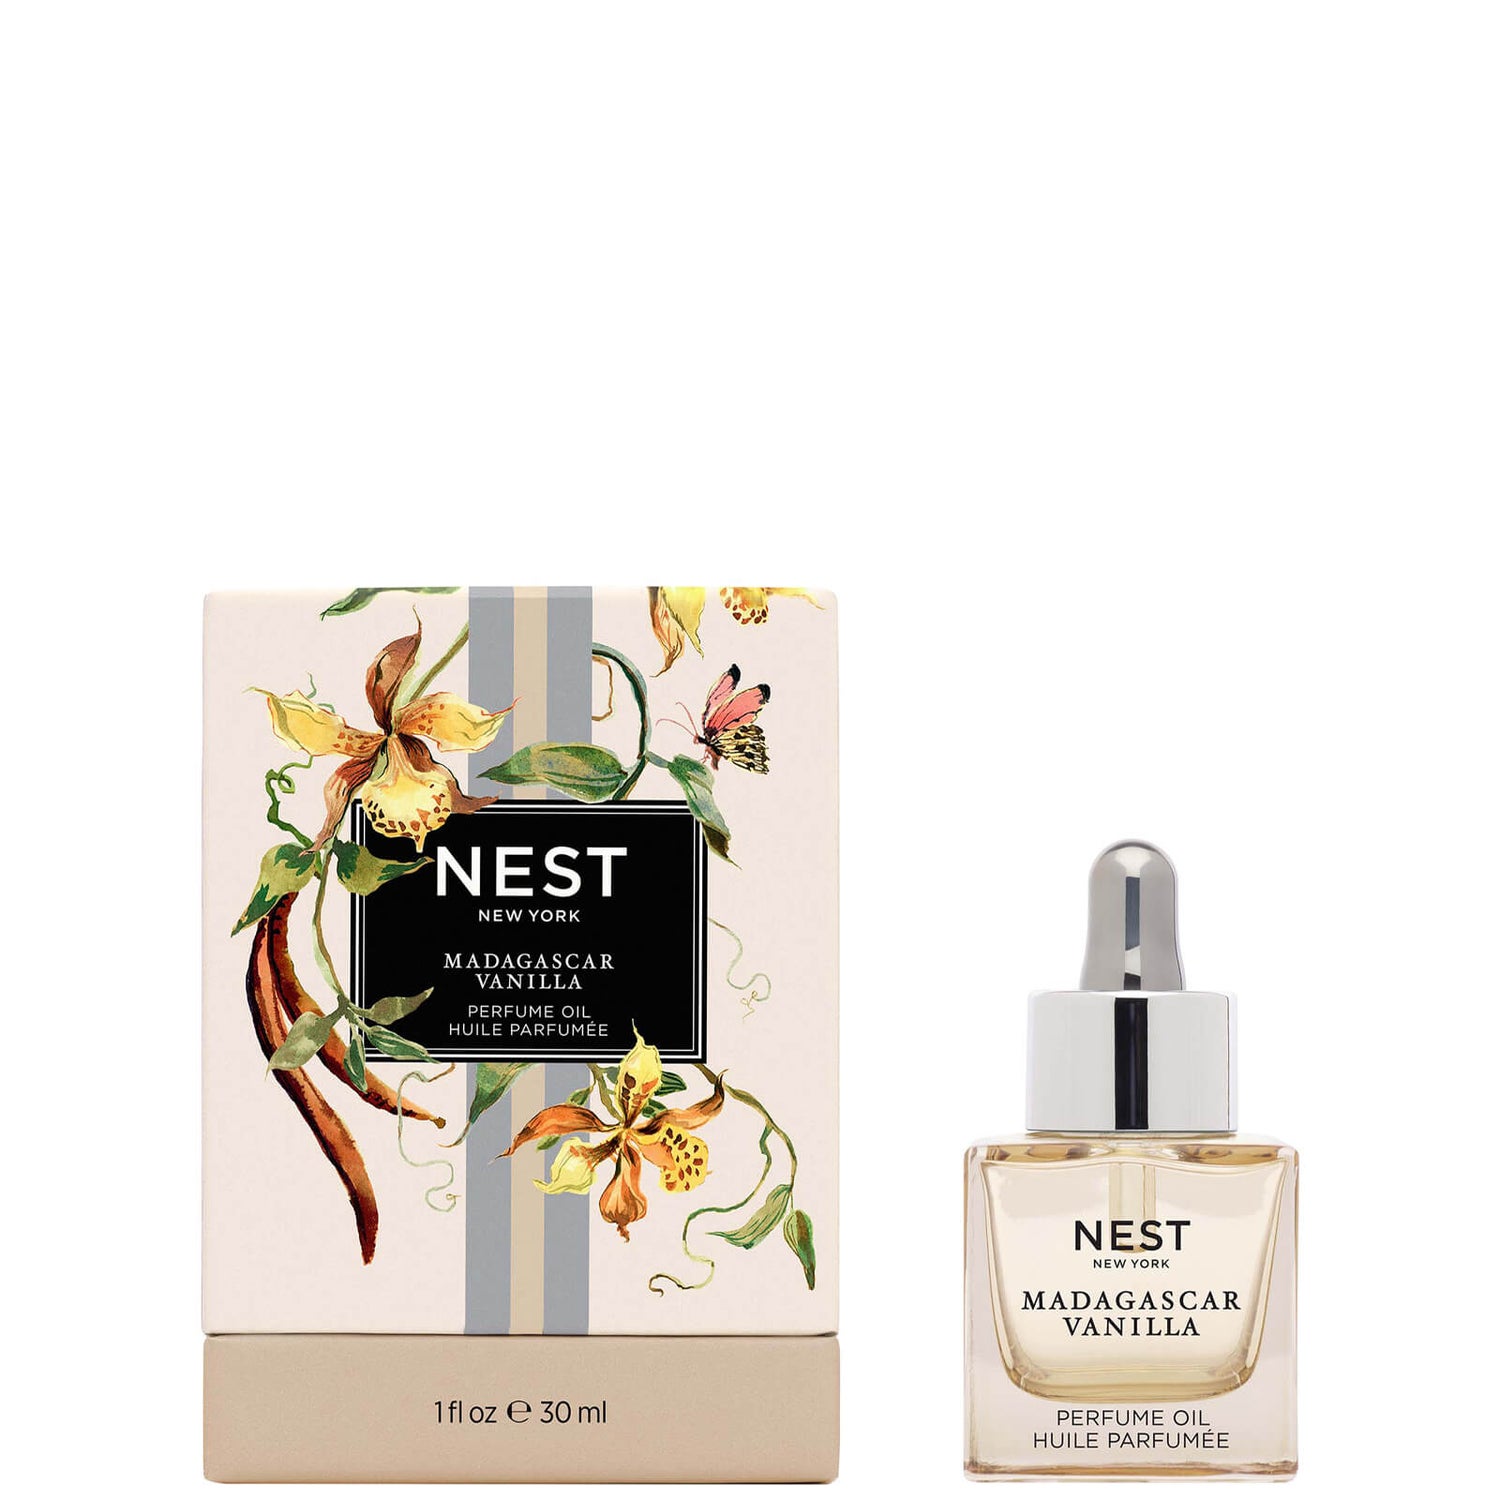 NEST New York Madagascar Vanilla Perfume Oil 30ml